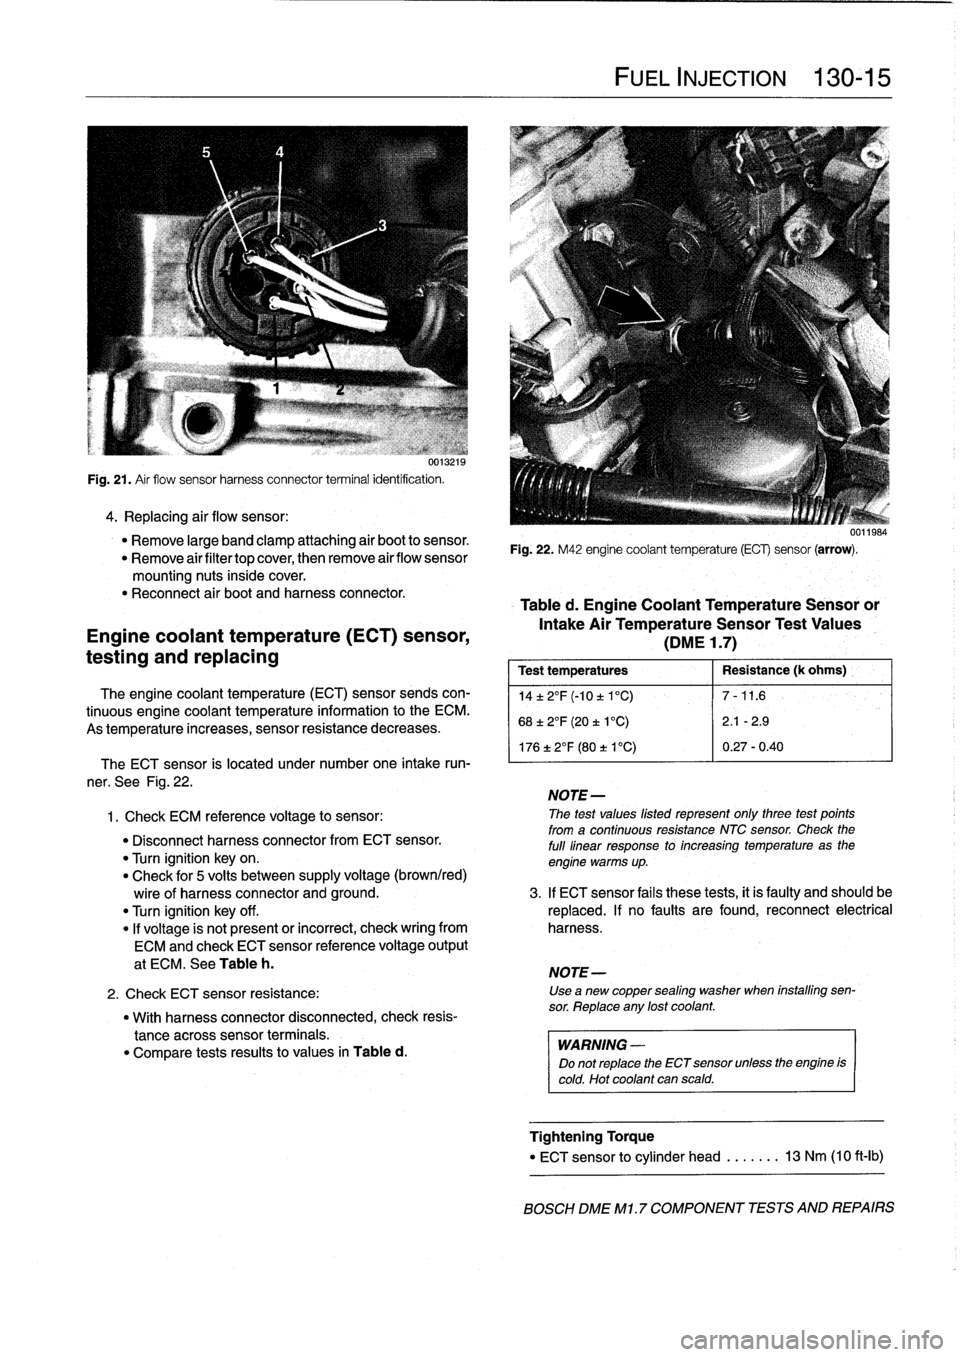 BMW 318i 1997 E36 Workshop Manual u0
I
.[
Ia

Fig
.
21
.
Air
flow
sensor
harness
connector
terminal
identification
.

4
.
Replacing
air
flow
sensor
:

"
Remove
large
band
clamp
attaching
air
boot
to
sensor
.

"
Remove
airfiltertop
cov